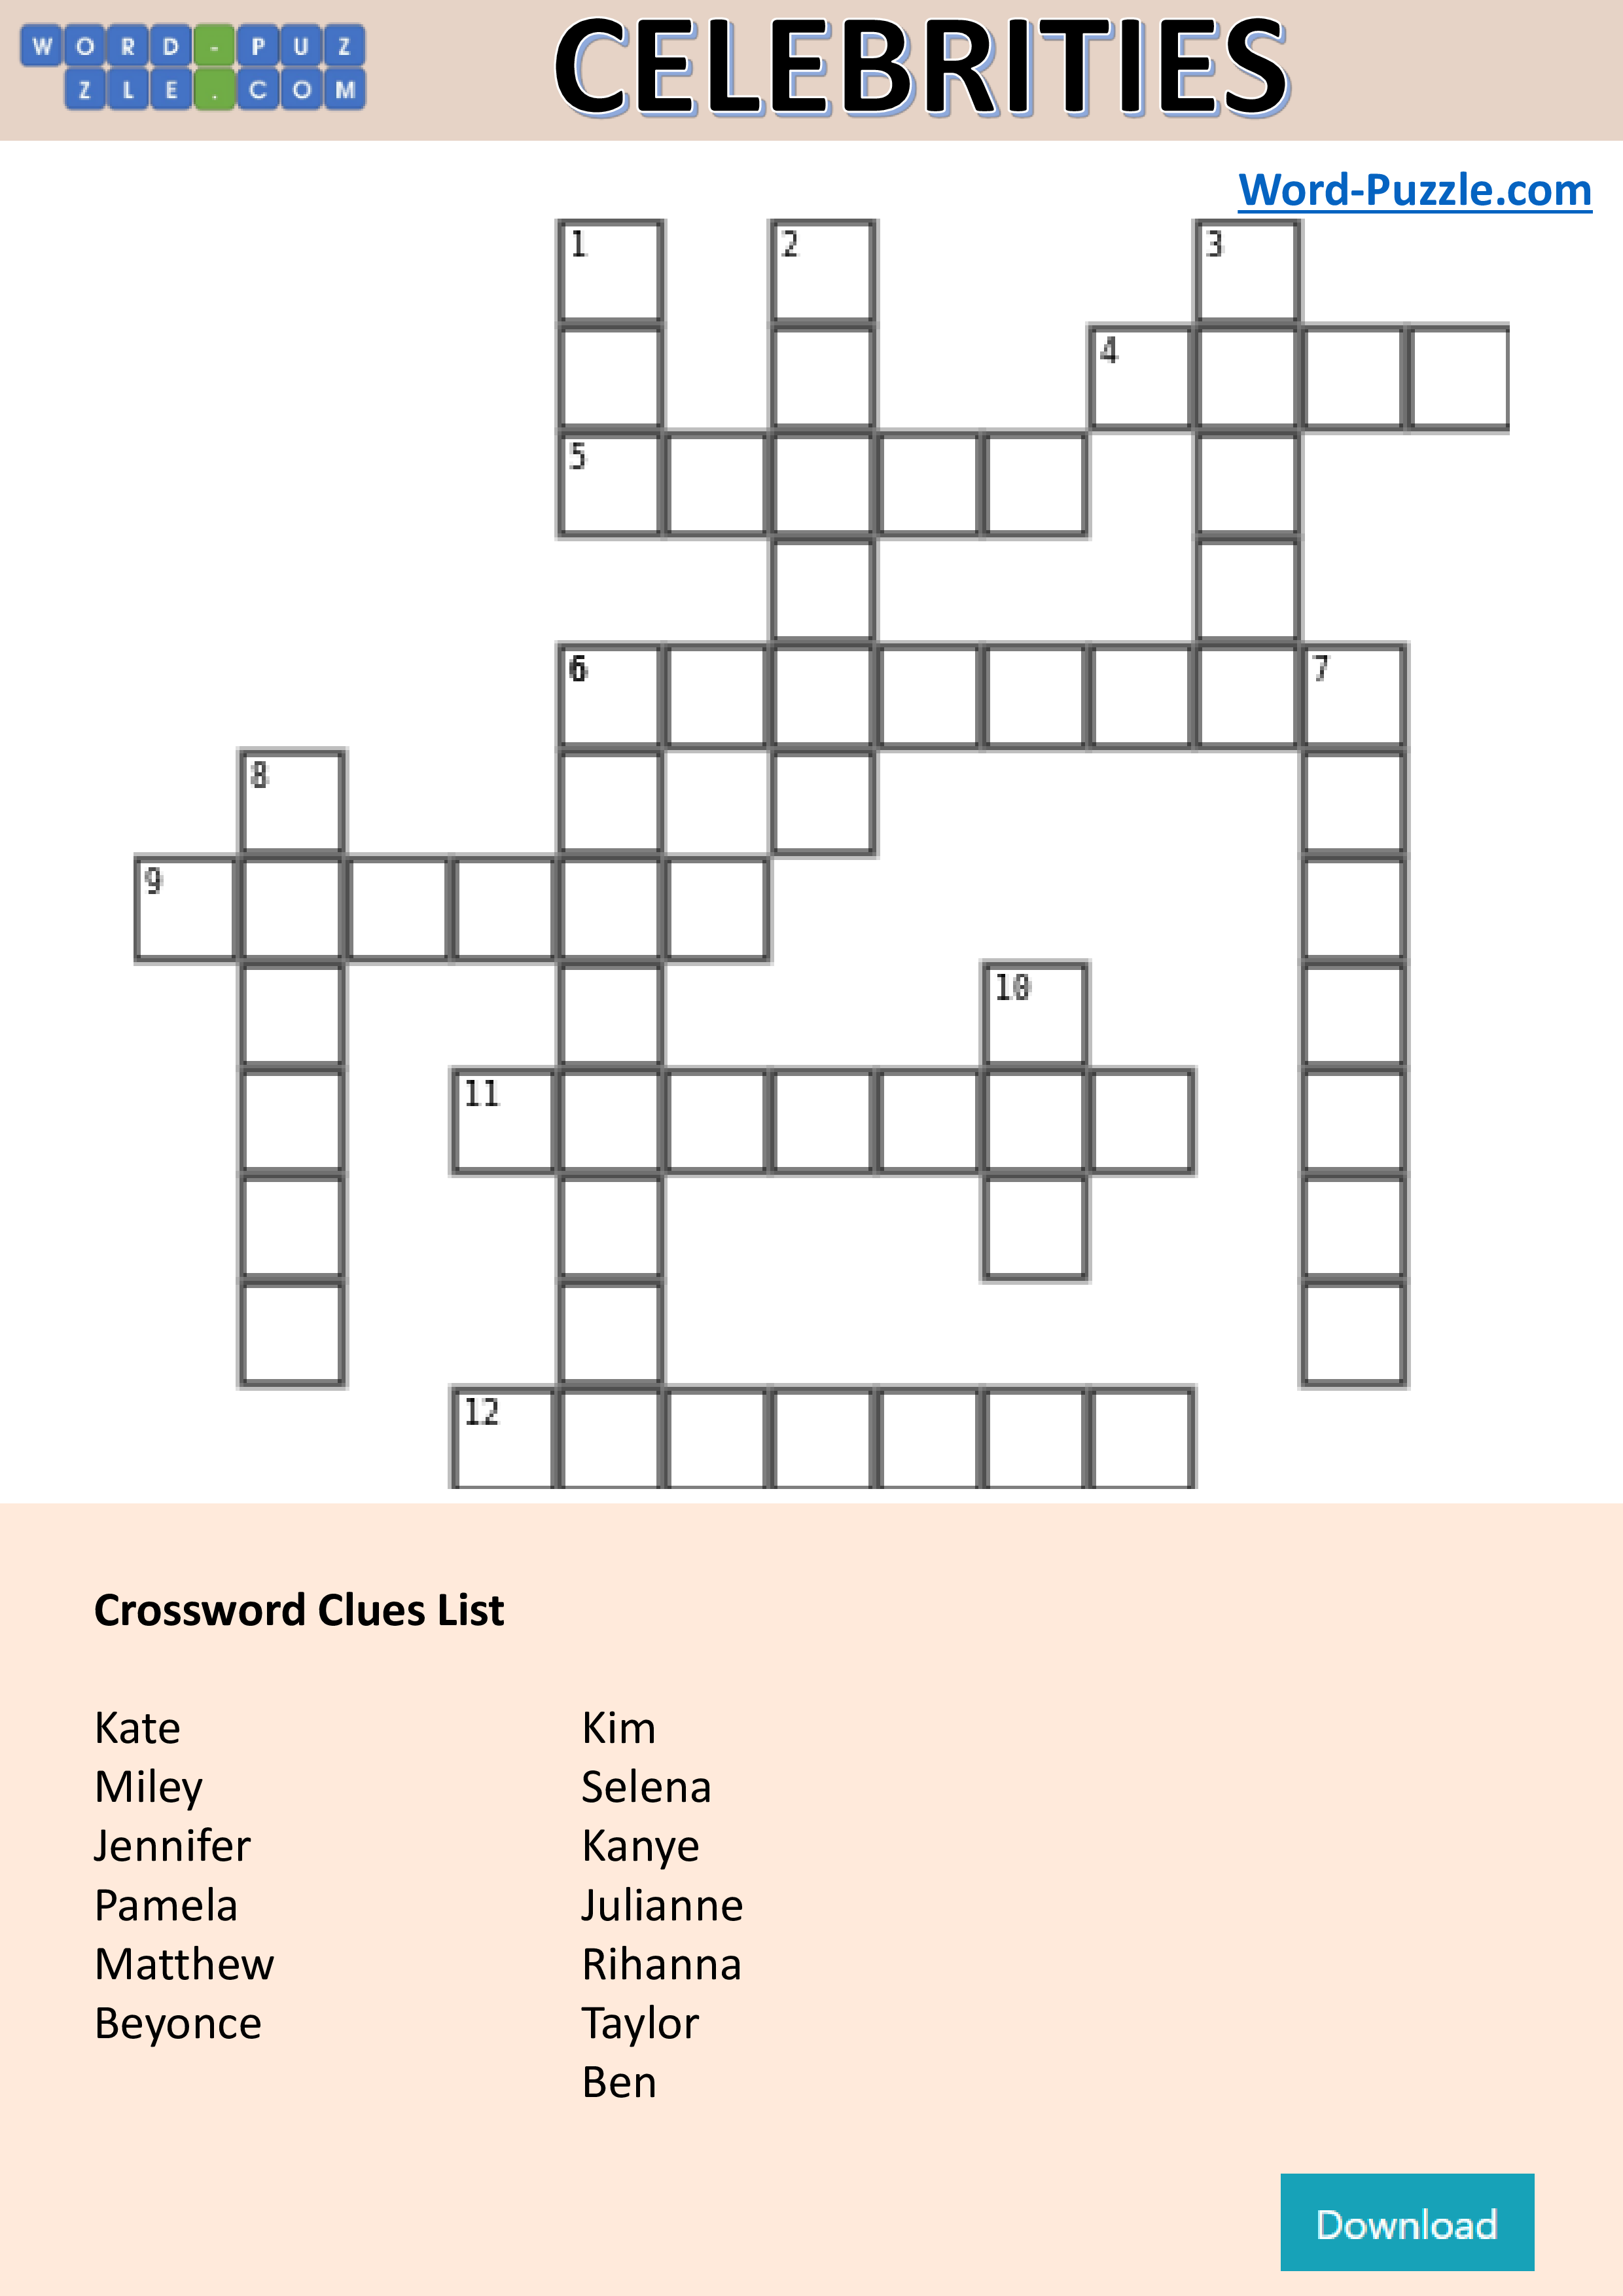 Celebrity Crossword Puzzle Templates At Allbusinesstemplates